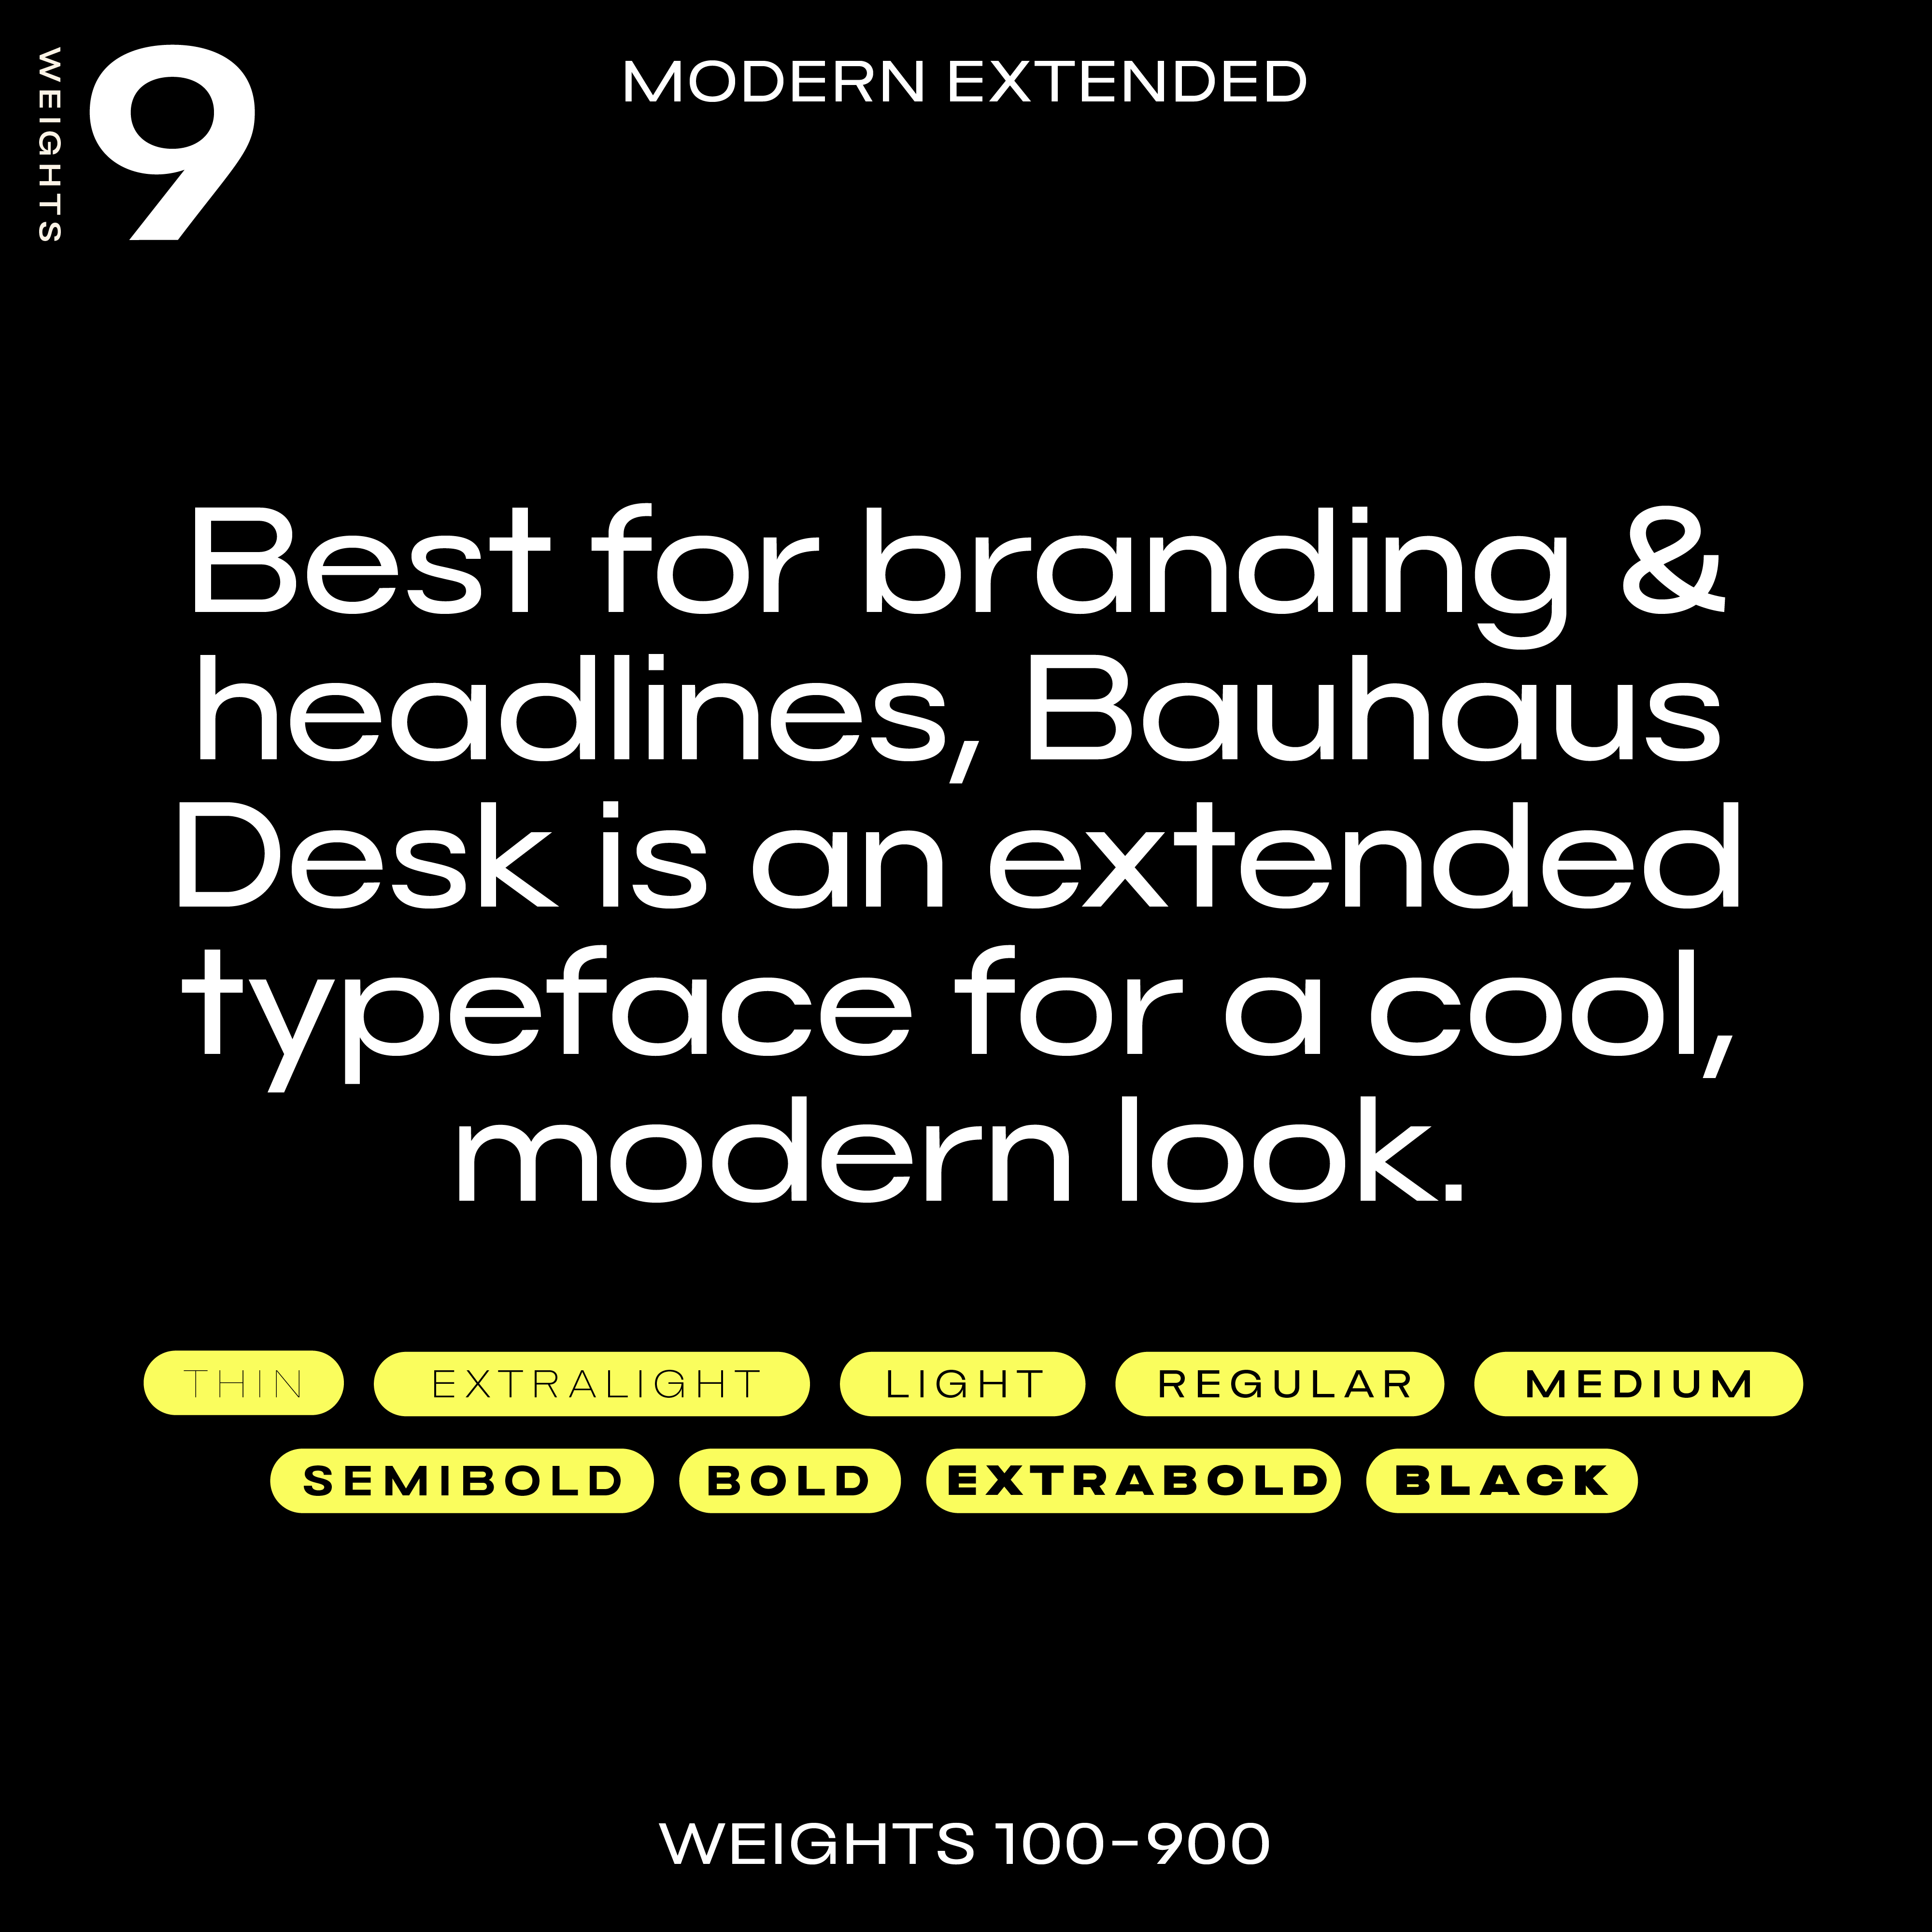 Bauhaus Desk—Extended font for tech & design